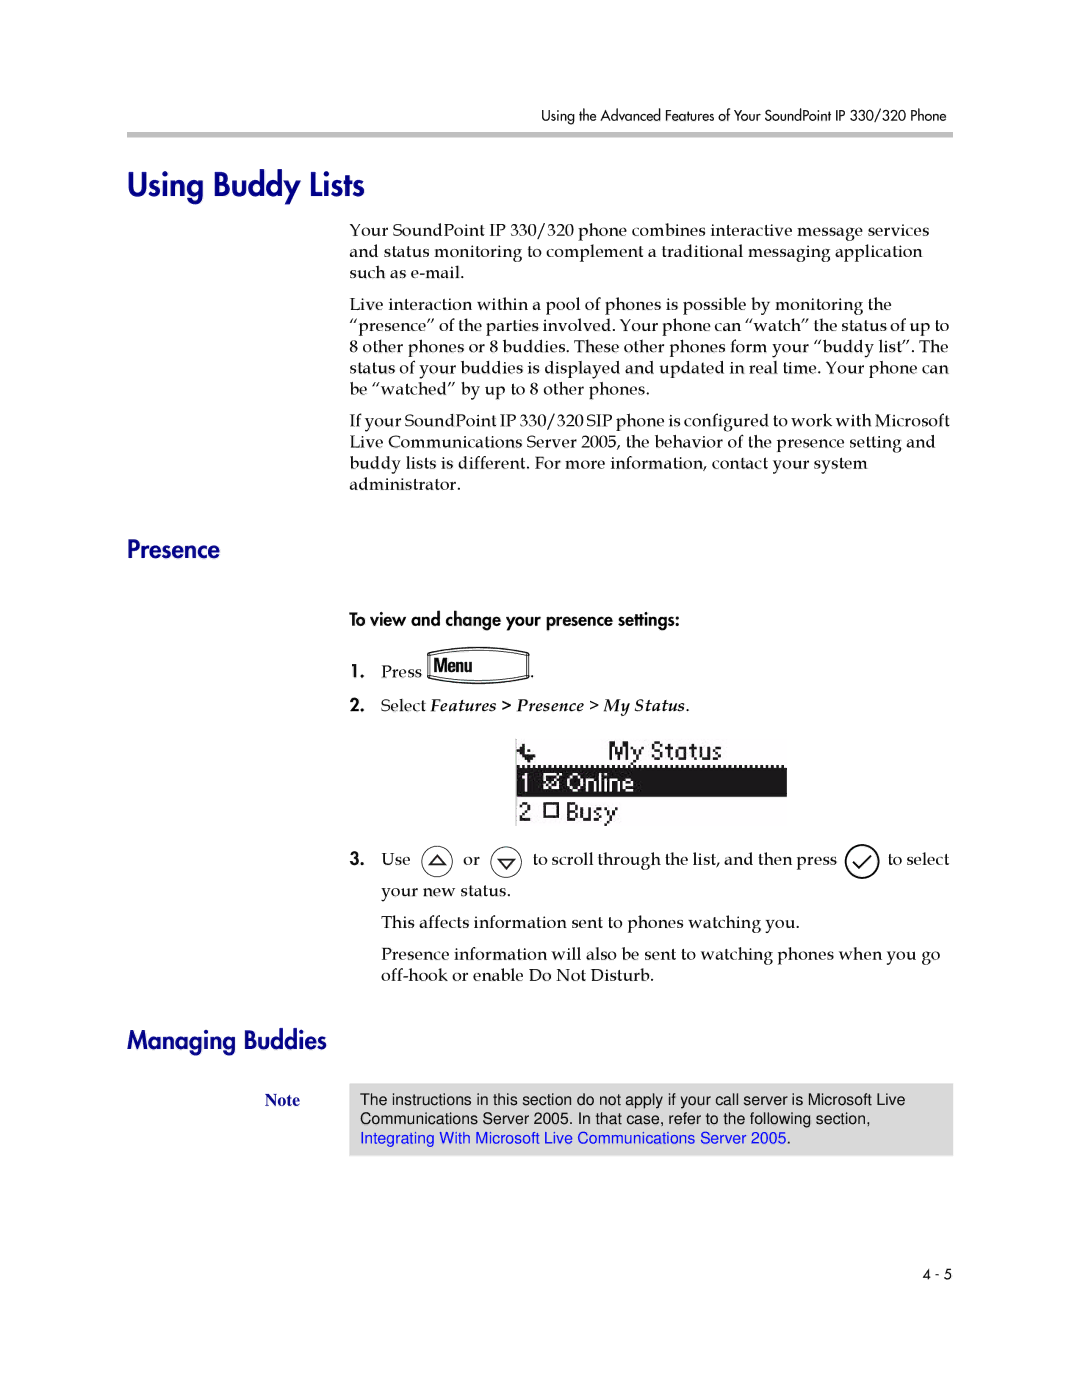 Polycom 320, 330 manual Using Buddy Lists, Managing Buddies, Select Features Presence My Status 